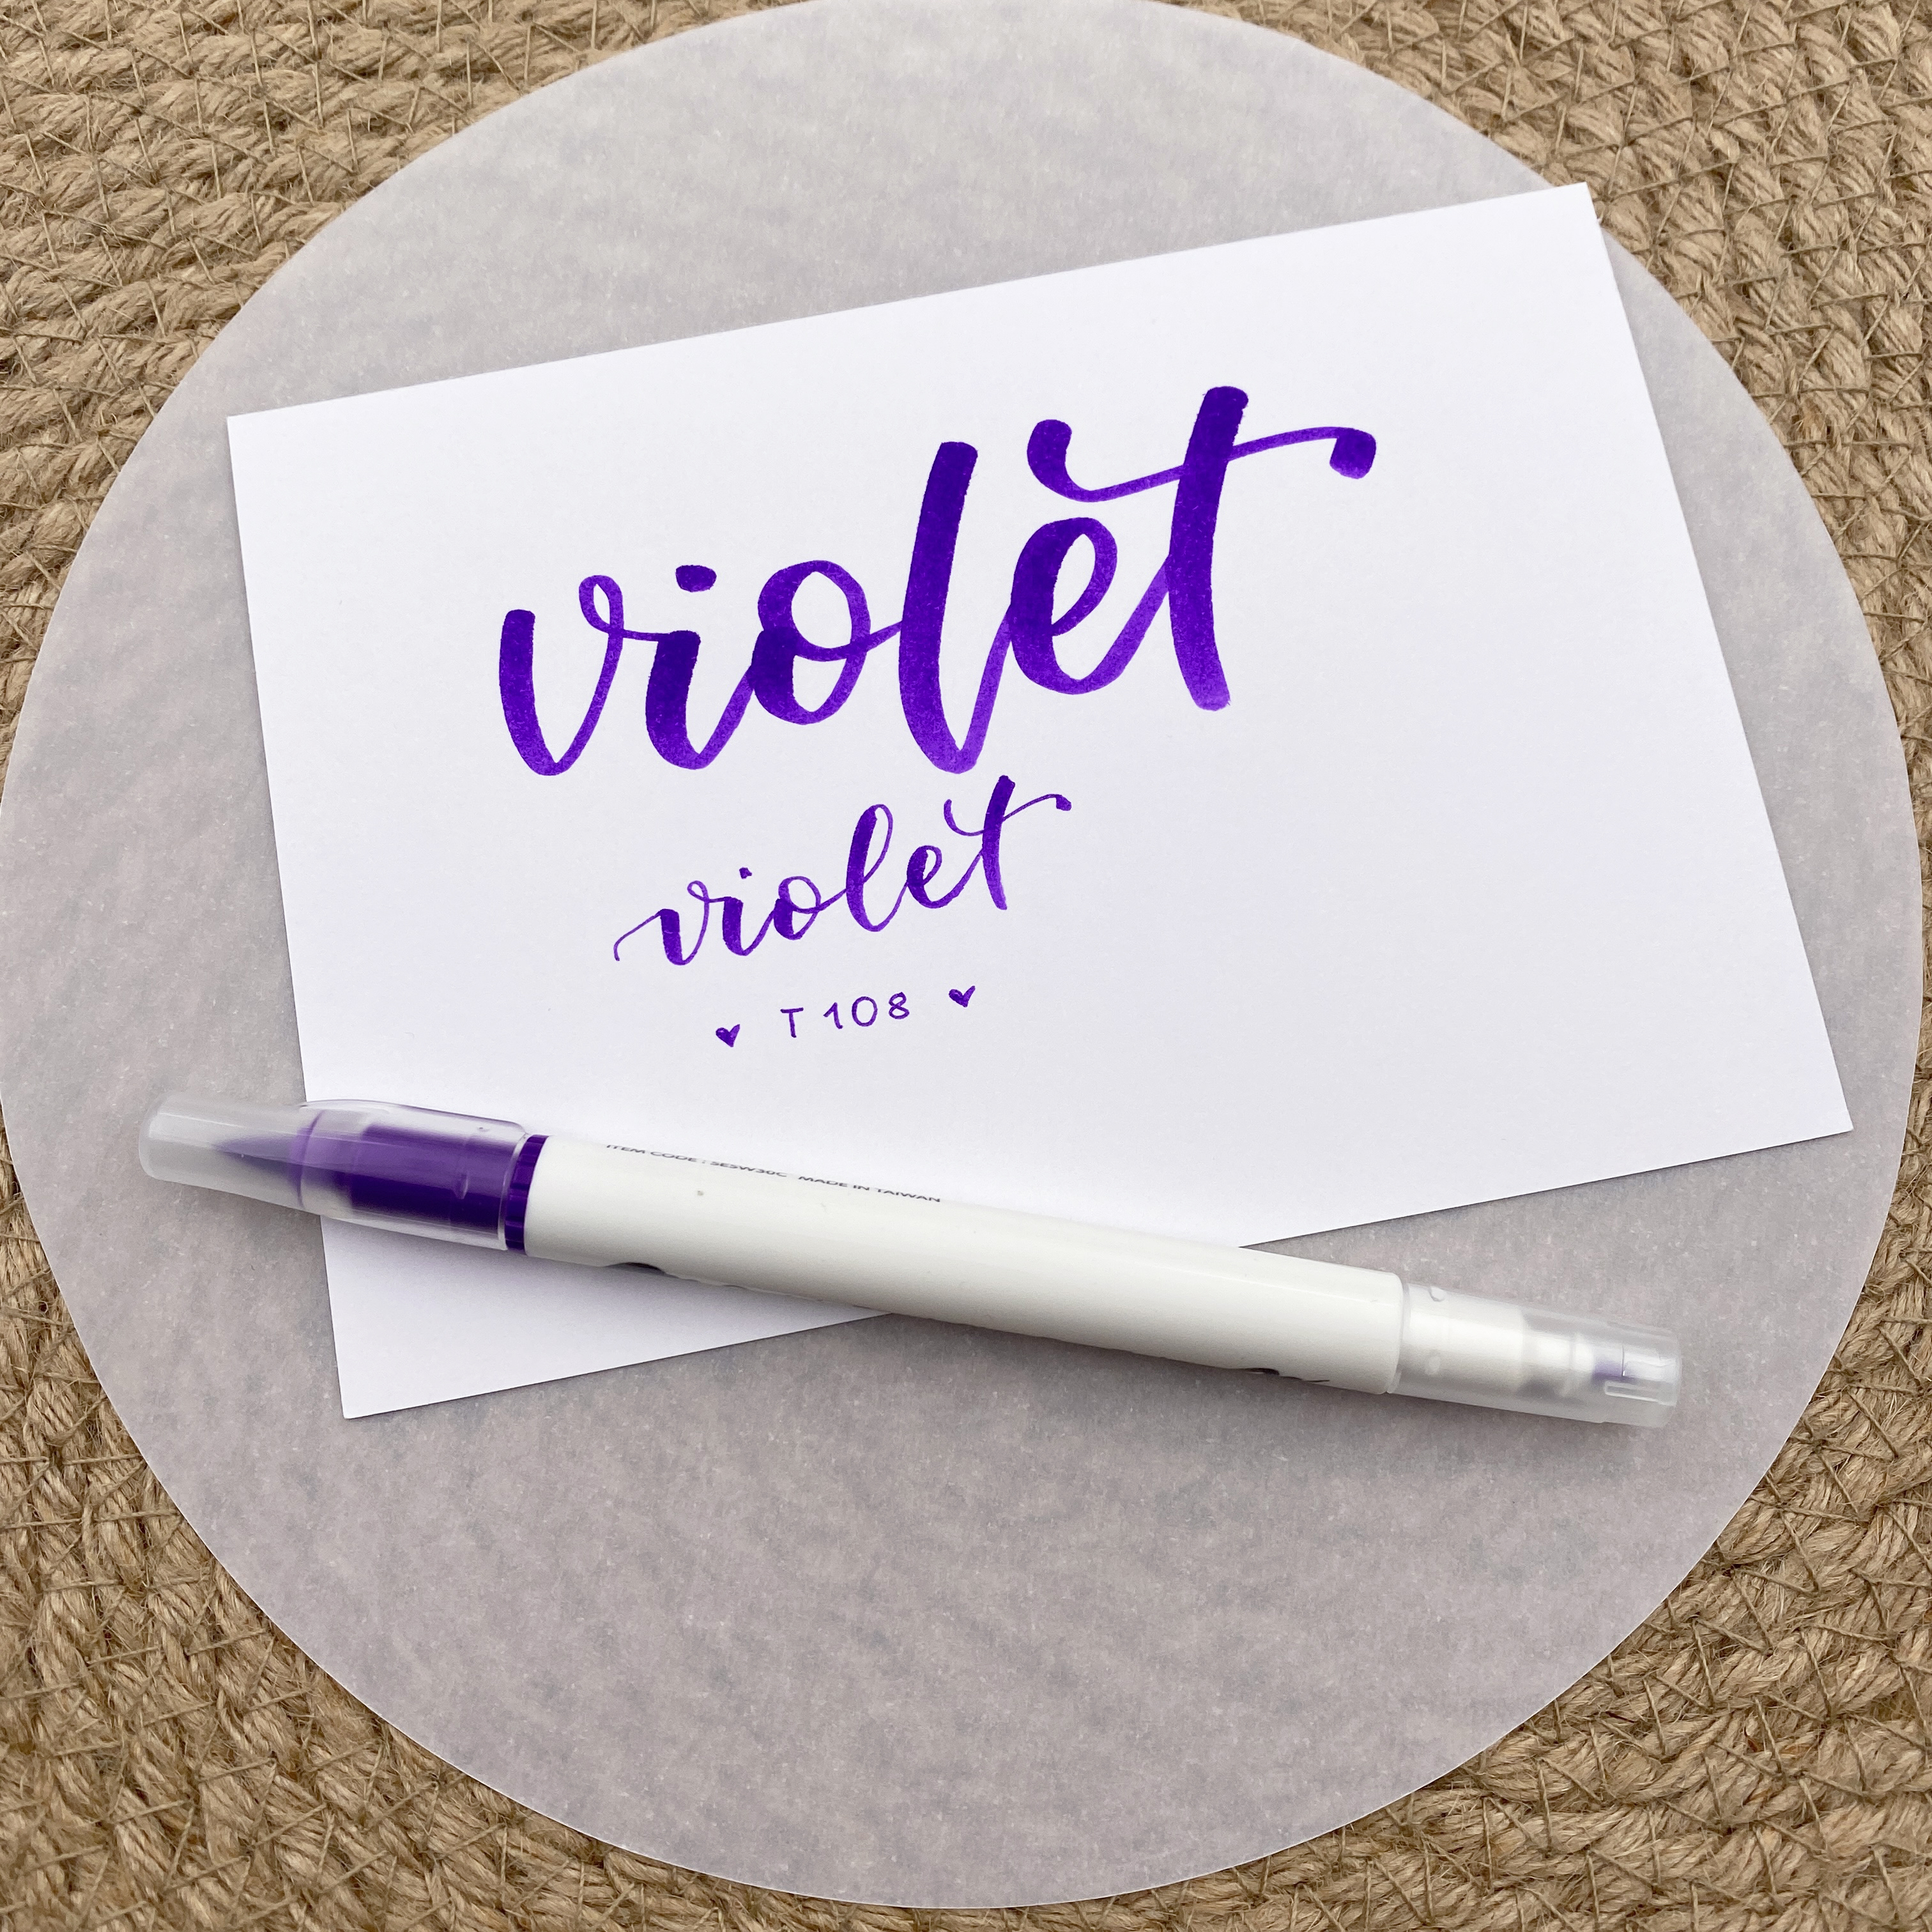 Pentel Brush Sign Pen Twin 108 Violet